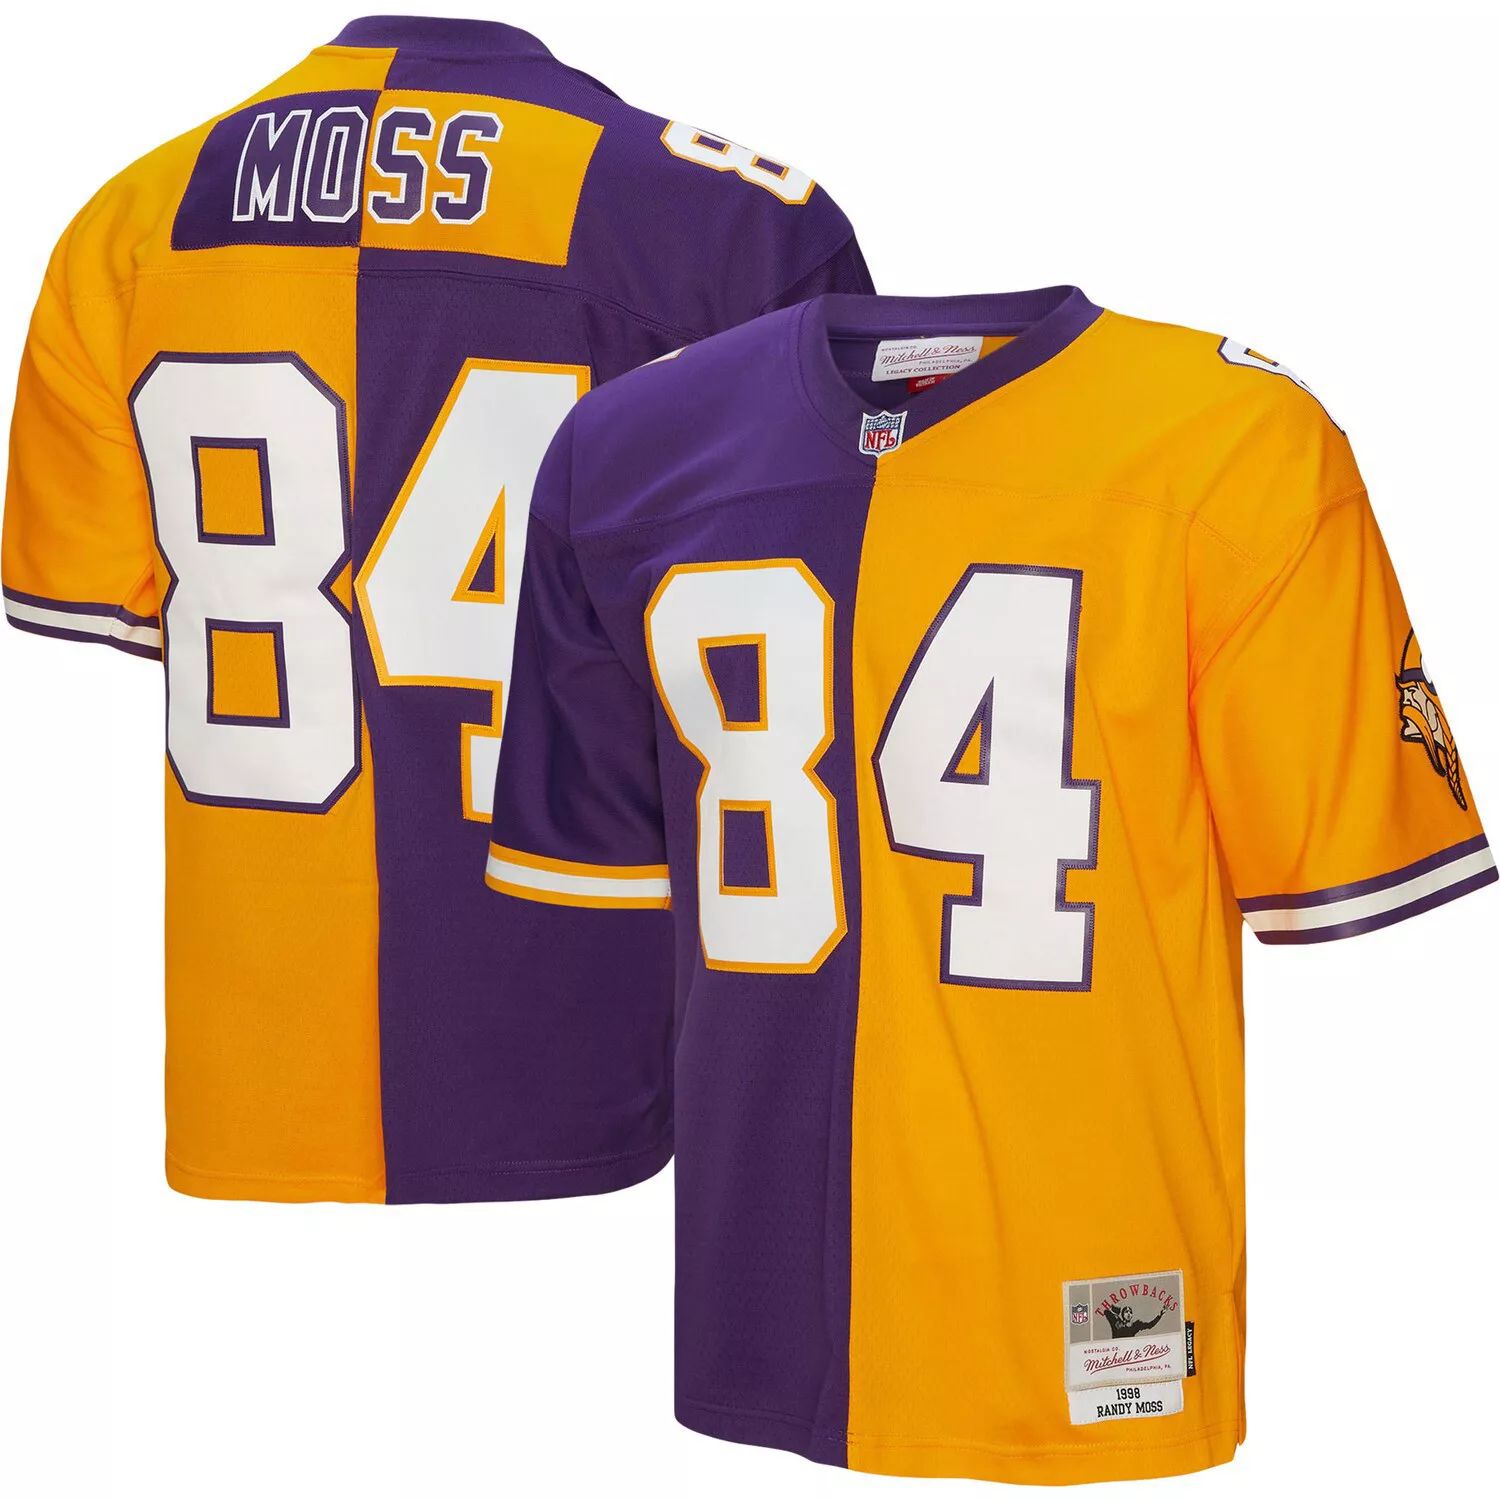 Мужская футболка Mitchell & Ness Randy Moss фиолетового/золотого цвета Minnesota Vikings 1998 Split Legacy Replica Jersey